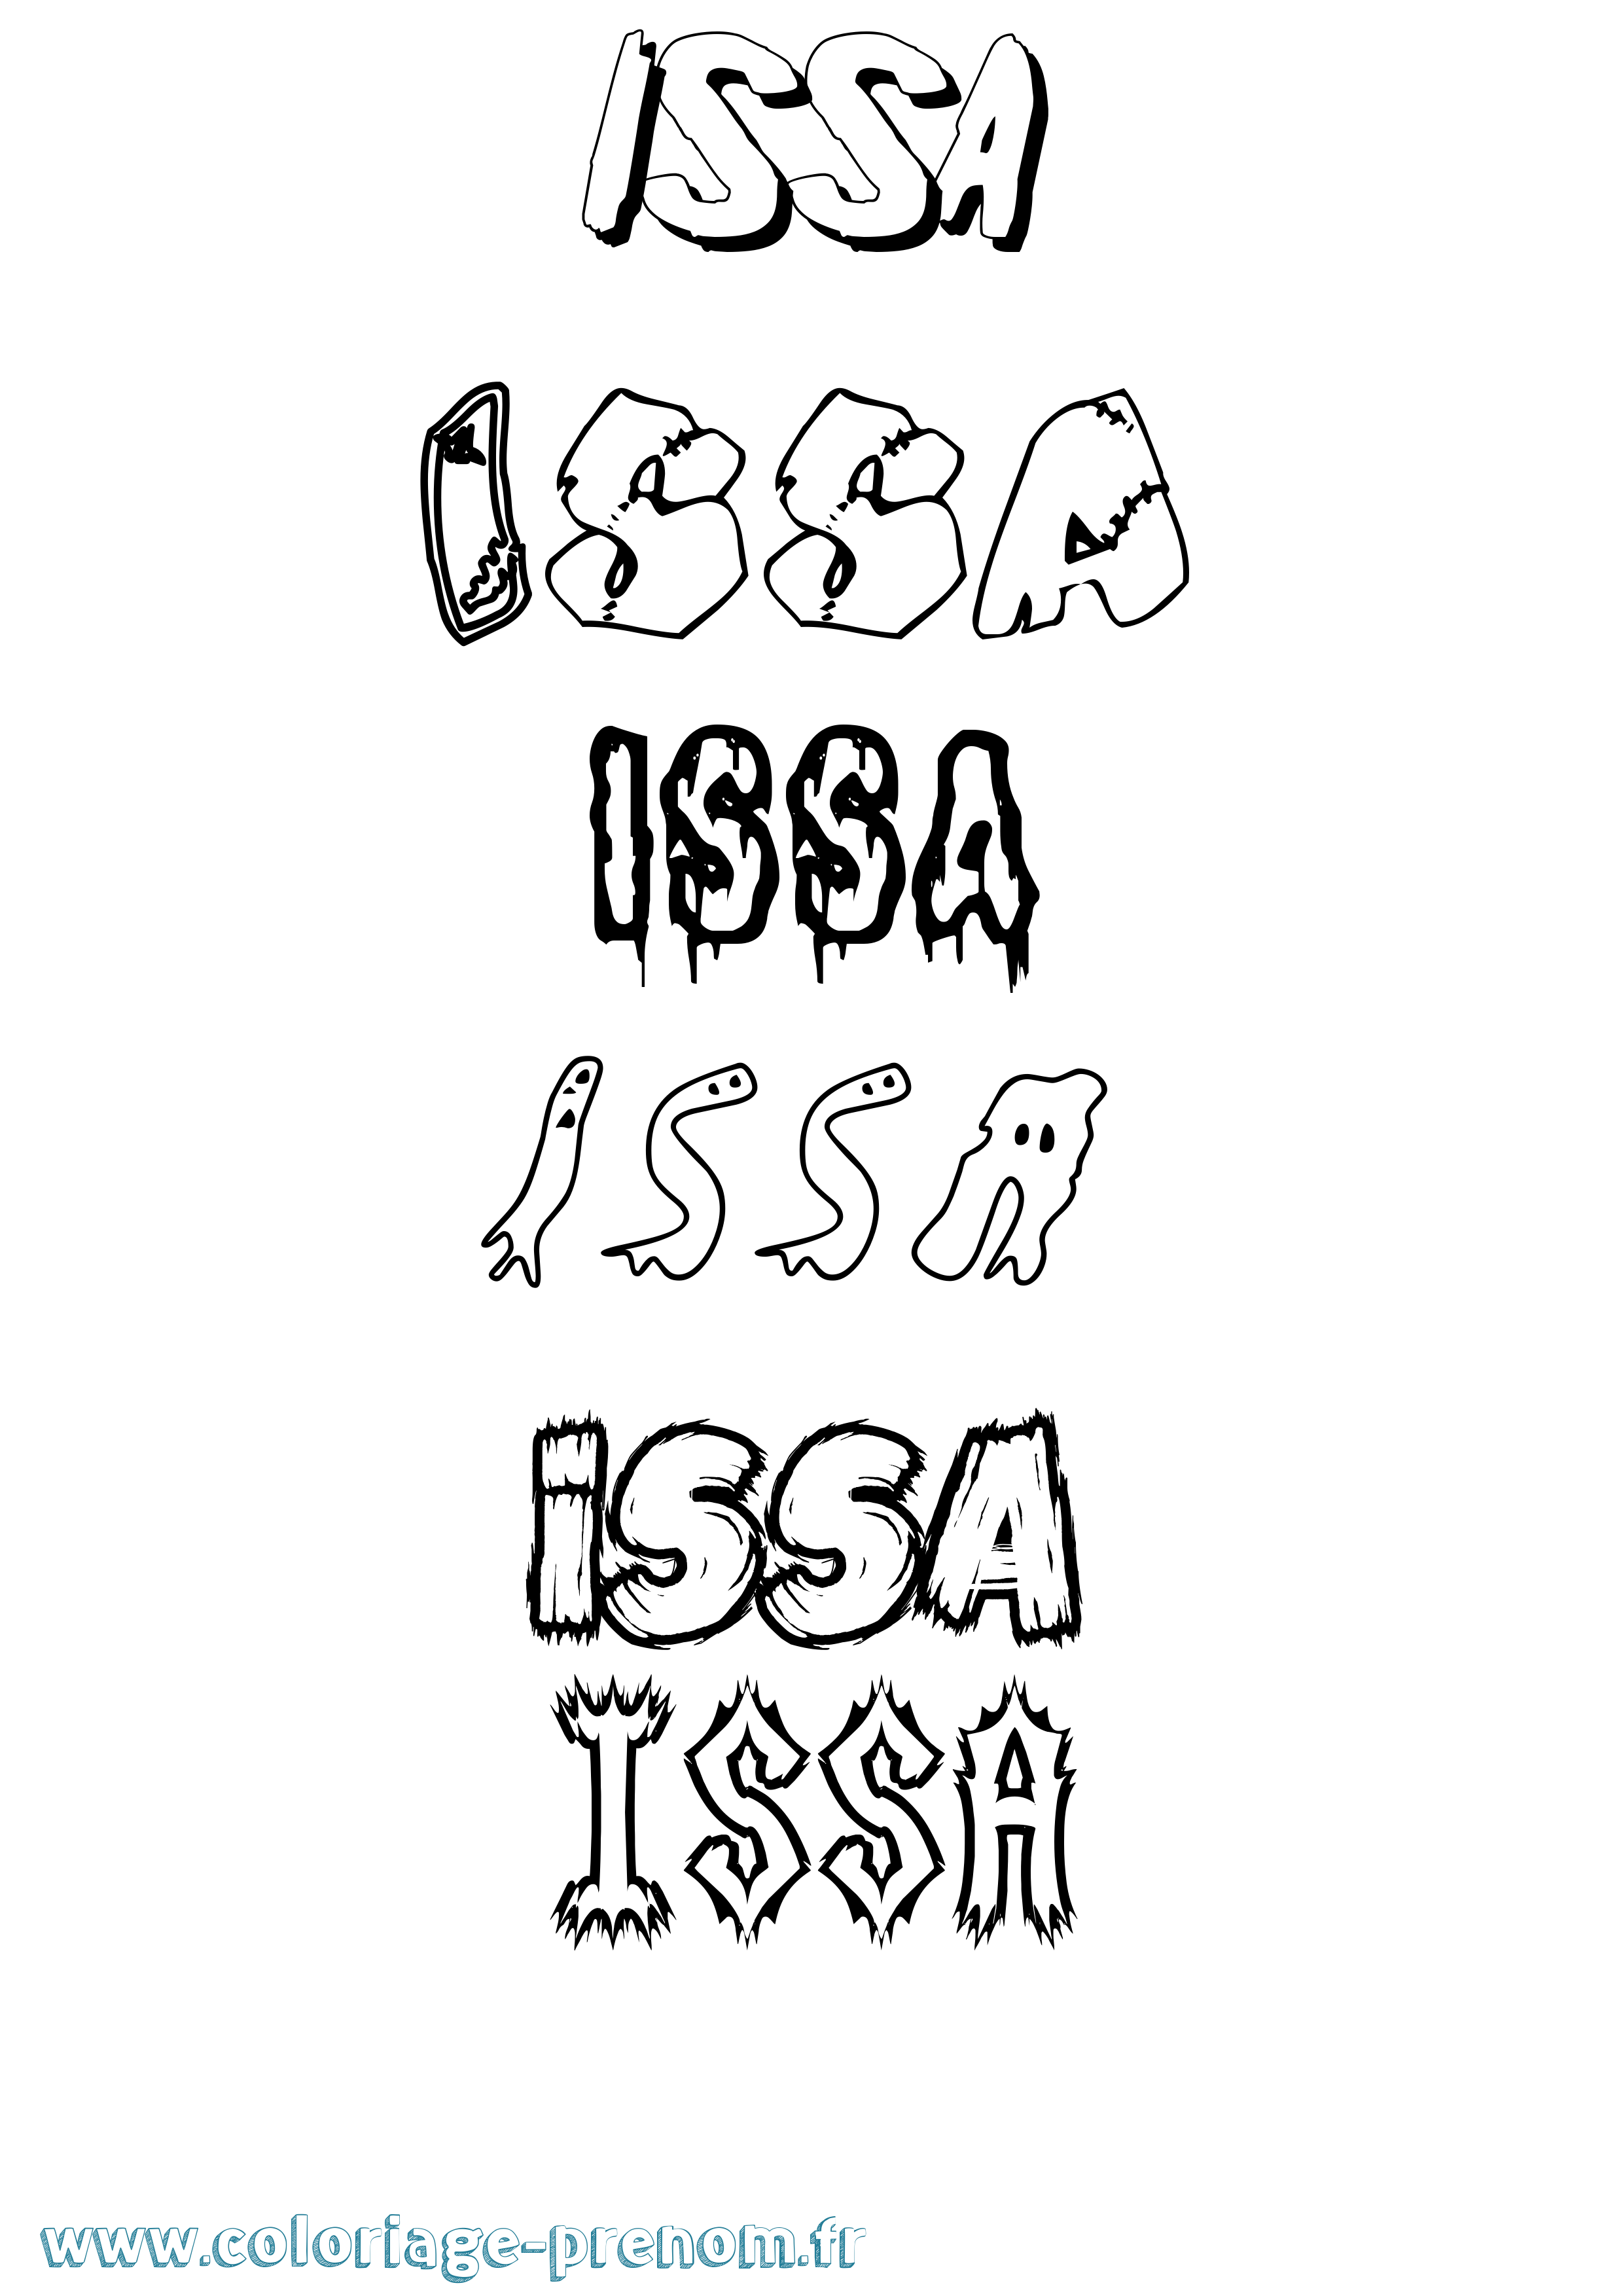 Coloriage prénom Issa